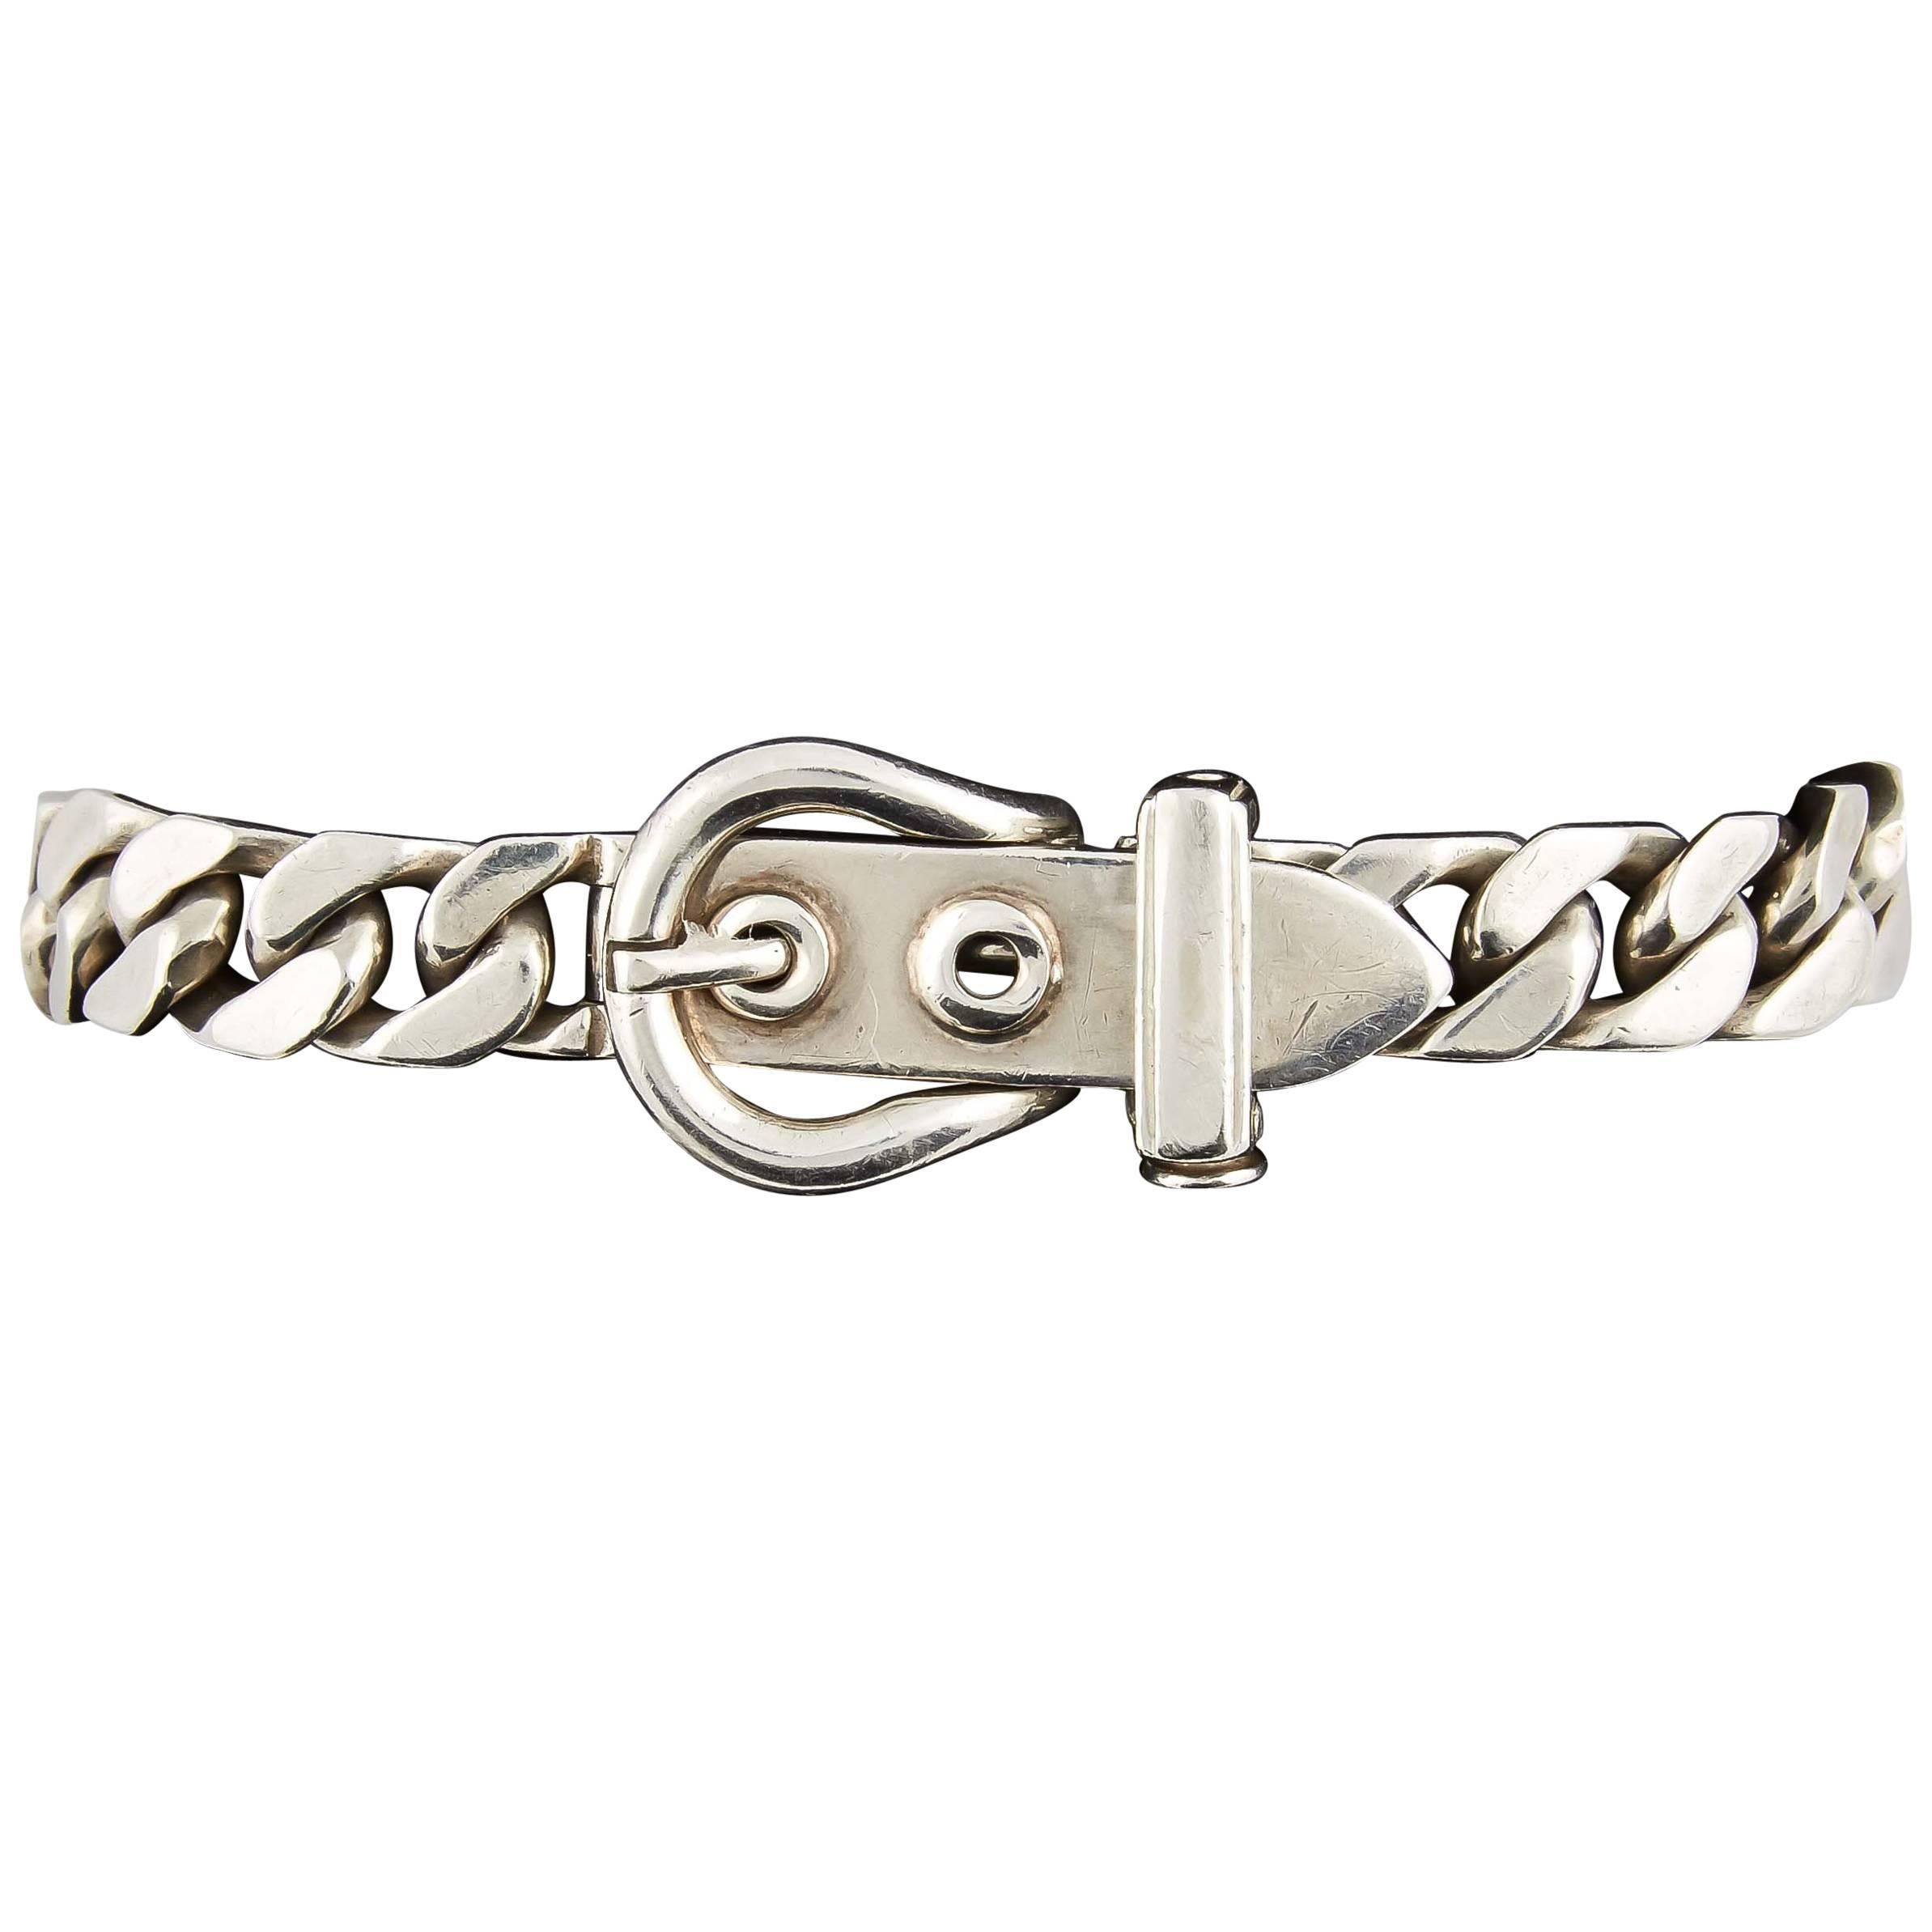 Hermes sterling silver buckle bracelet 